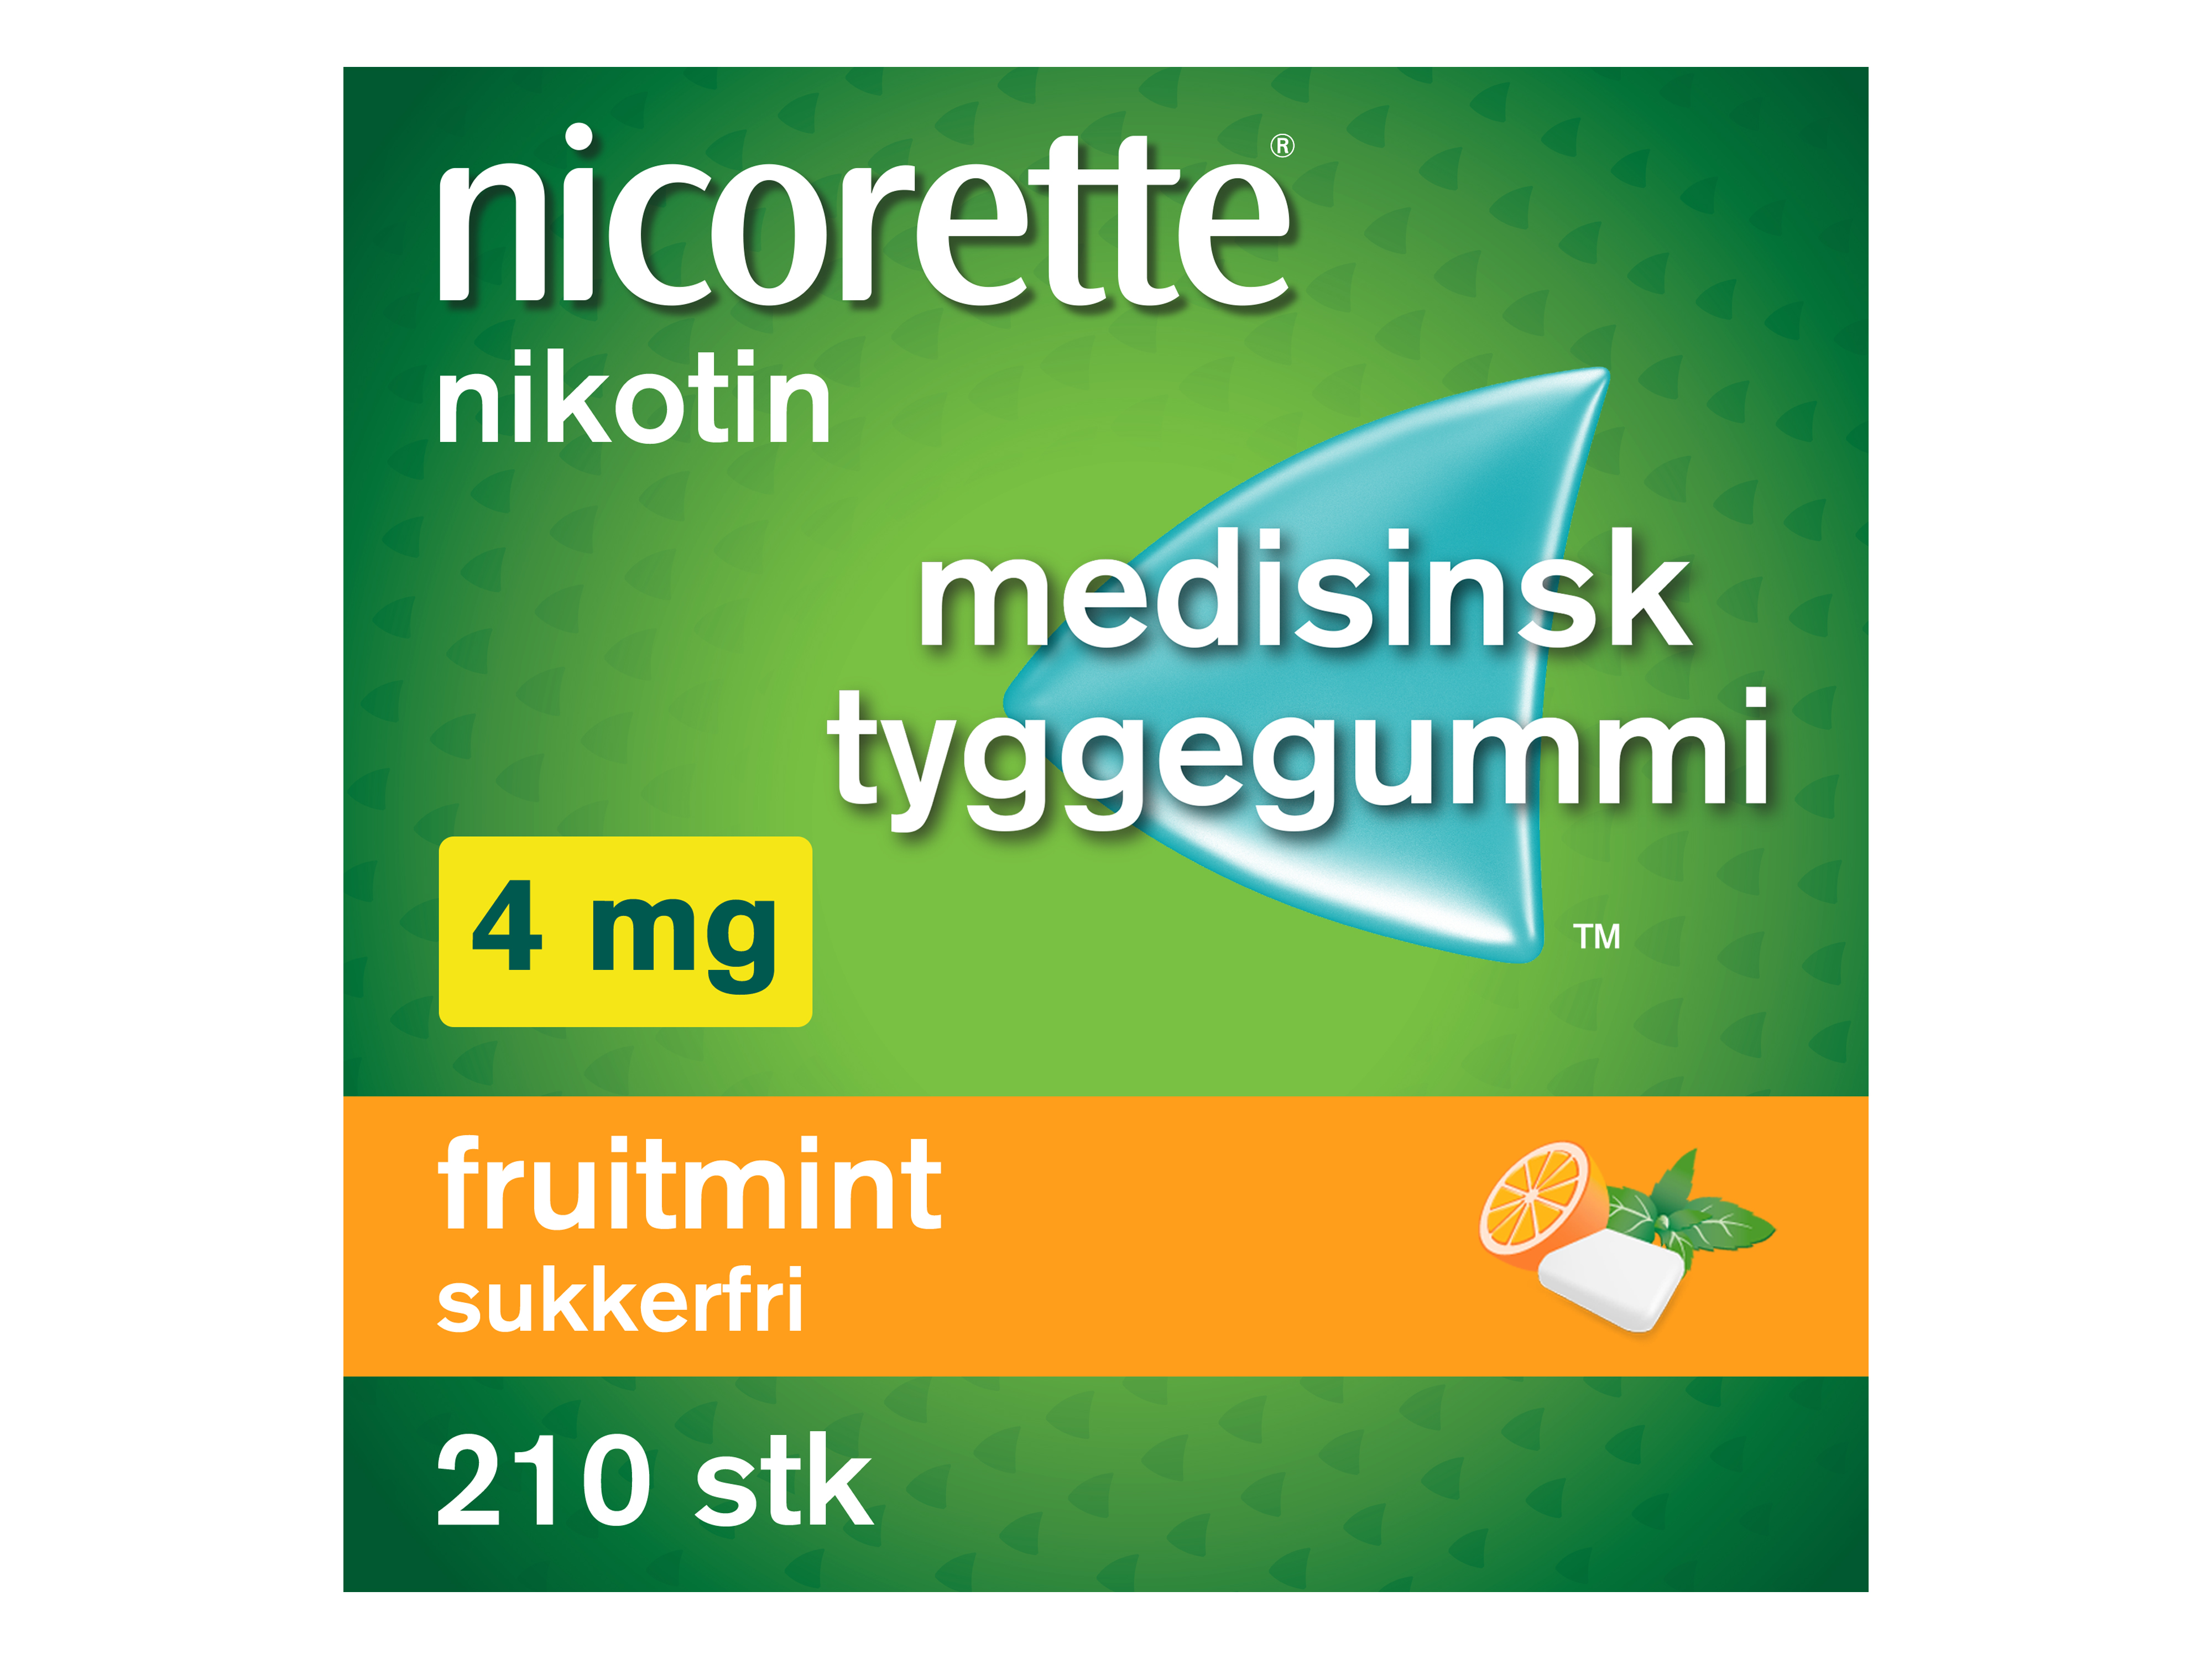 Nicorette 4 mg tyggegummi, Fruitmint, 210 stk.